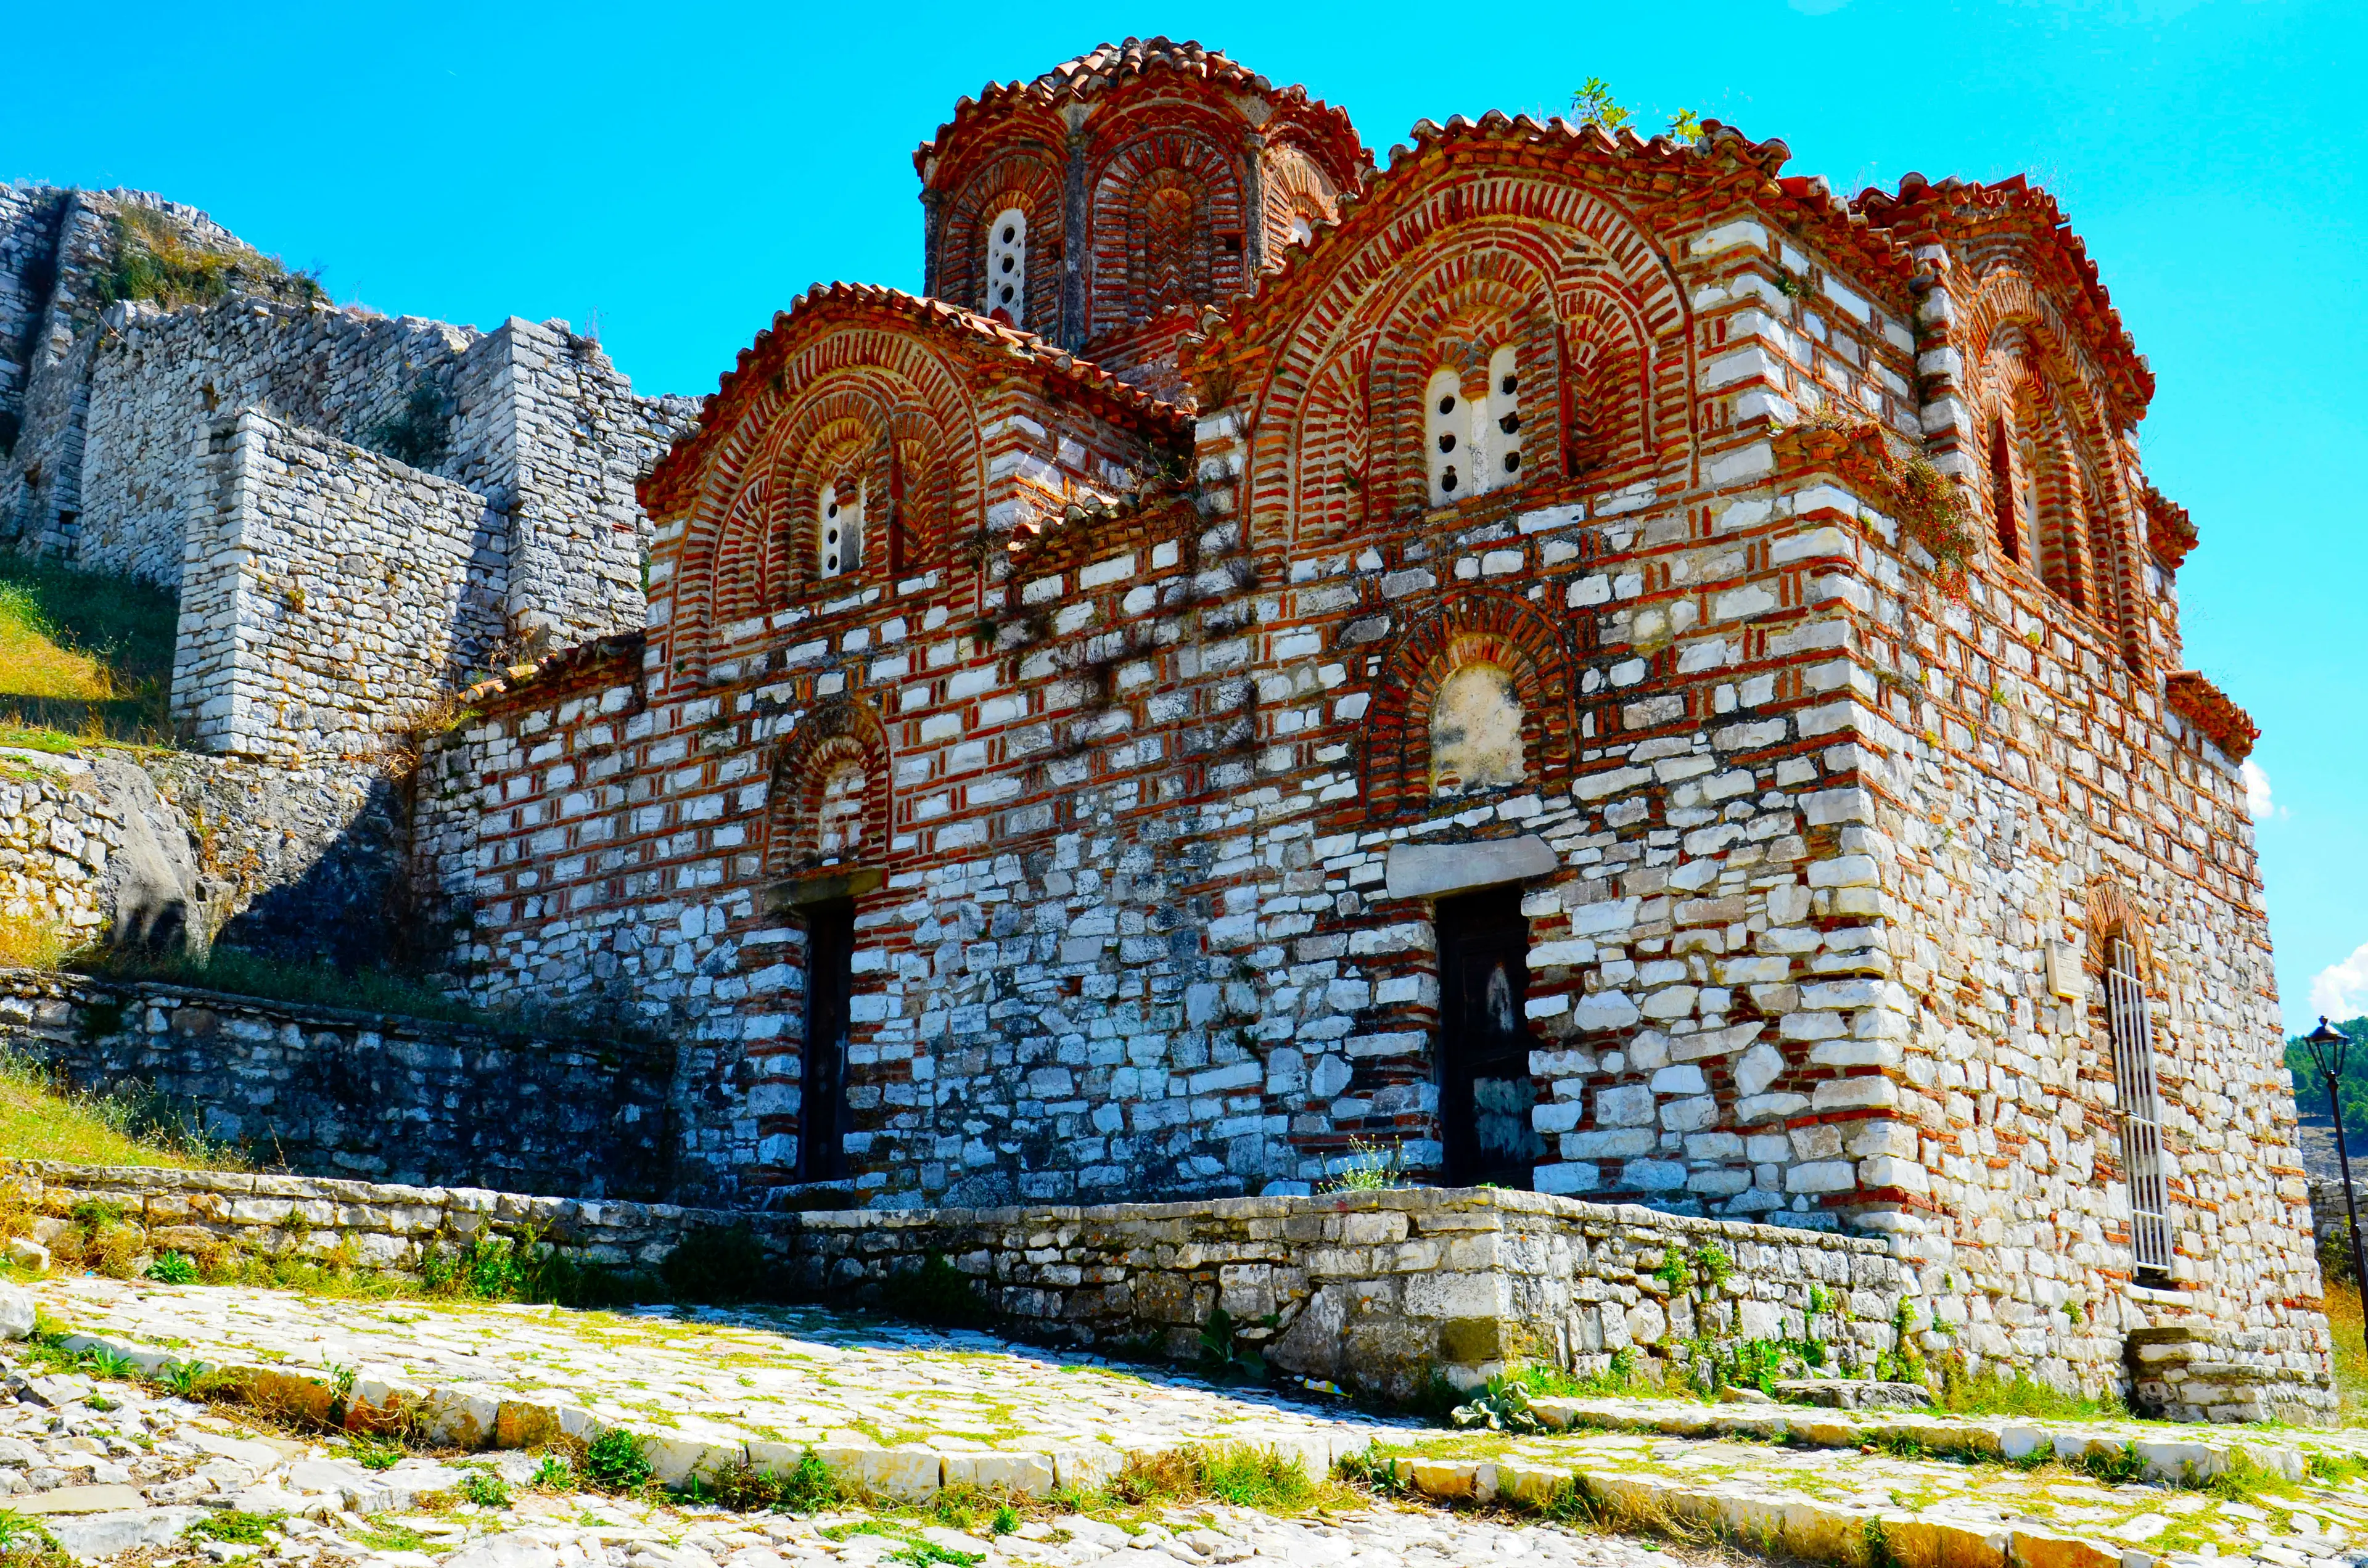 Explore UNESCO's Berat, Albania: A One Day Itinerary